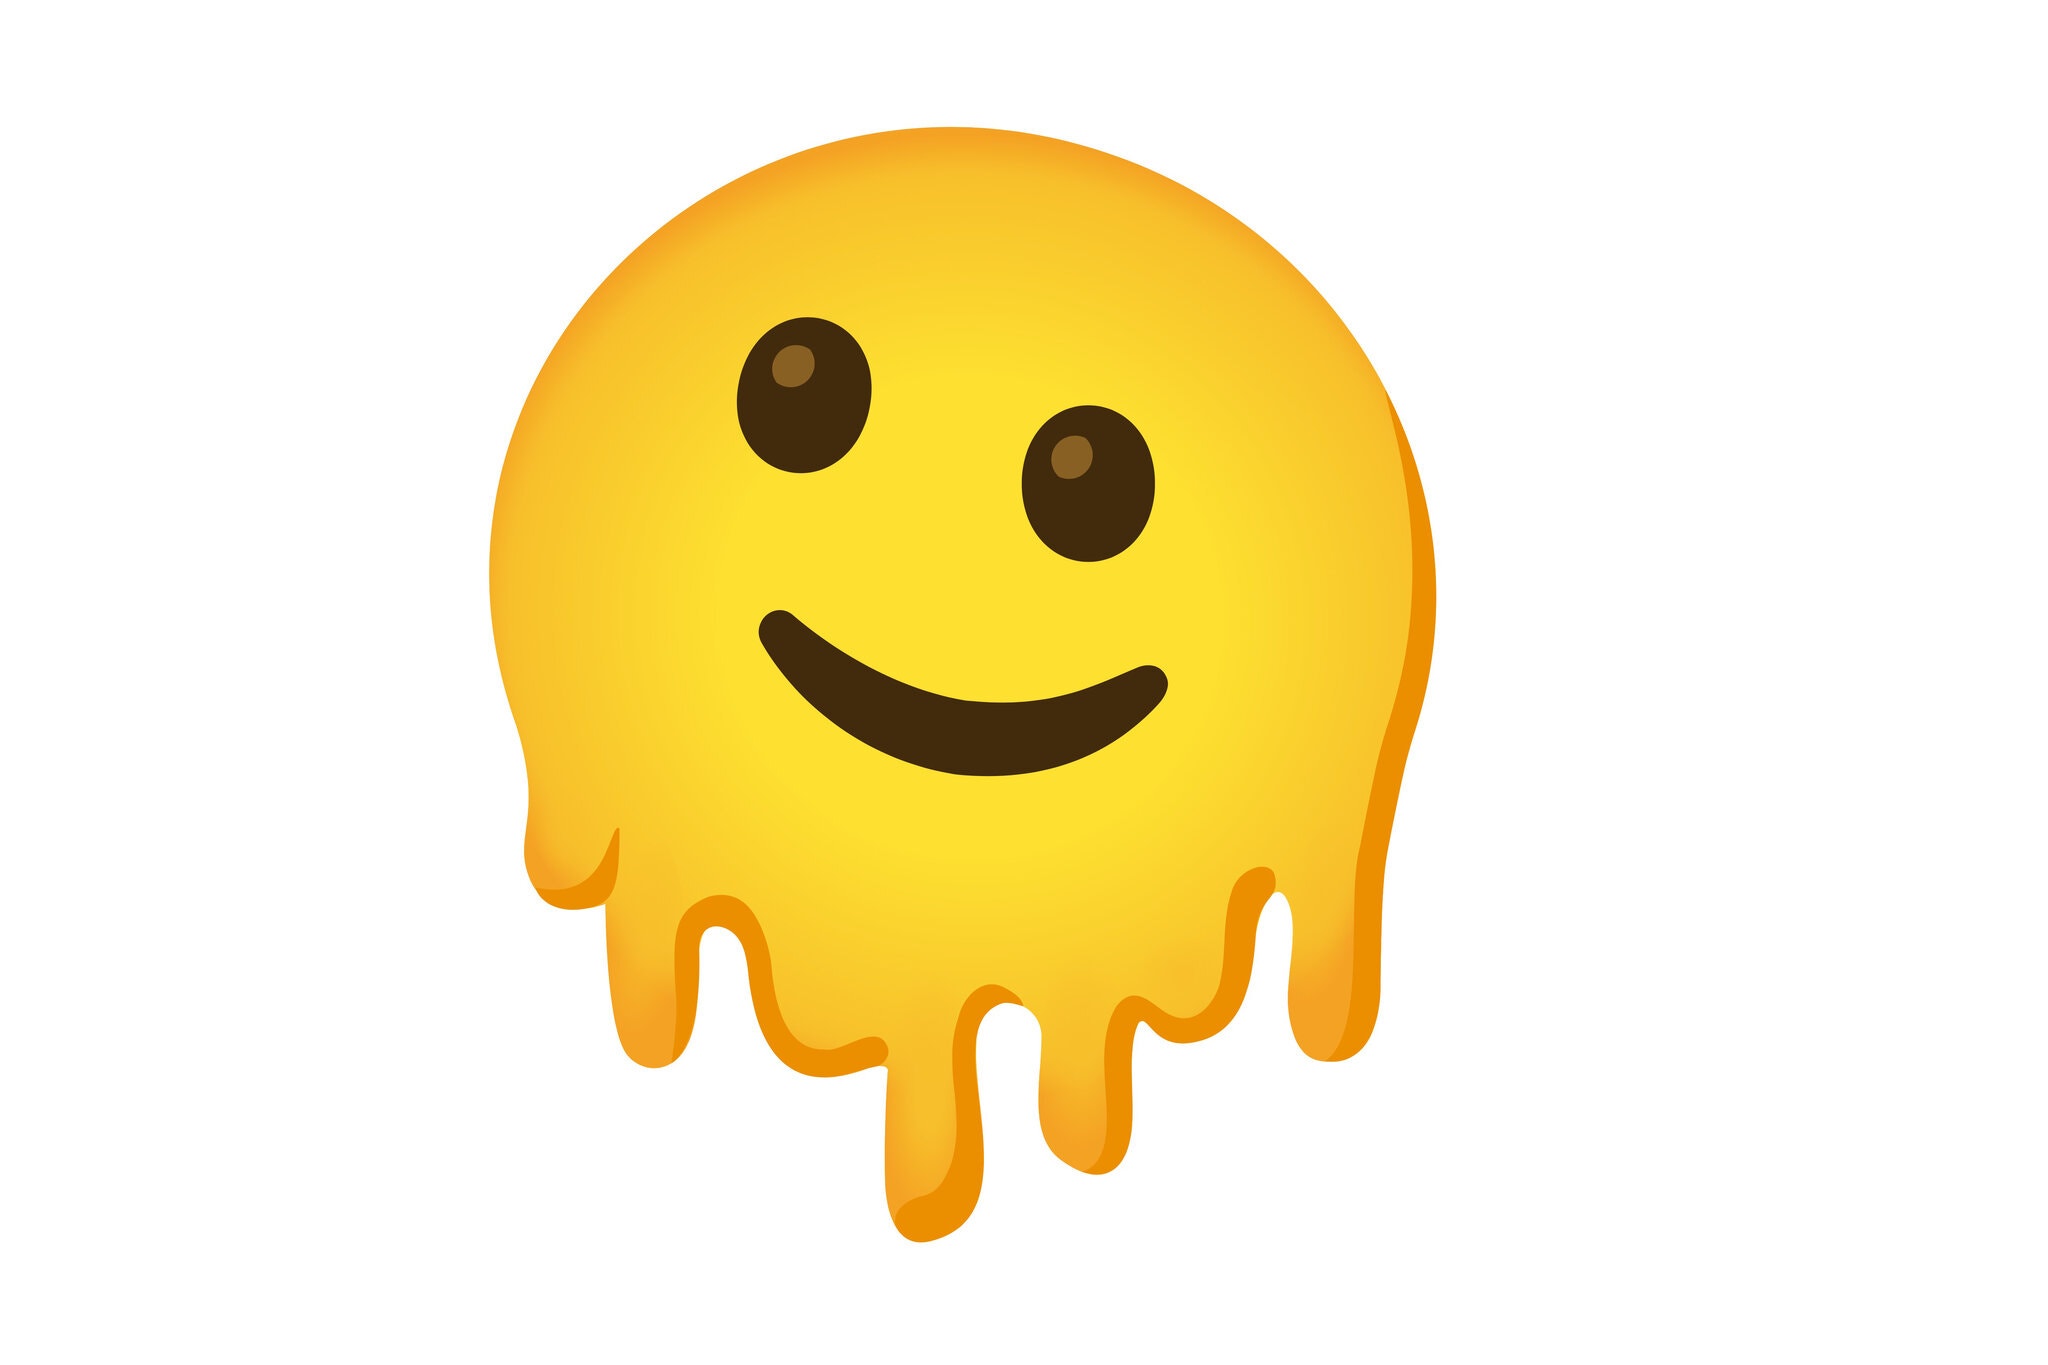 The Melting Face Emoji